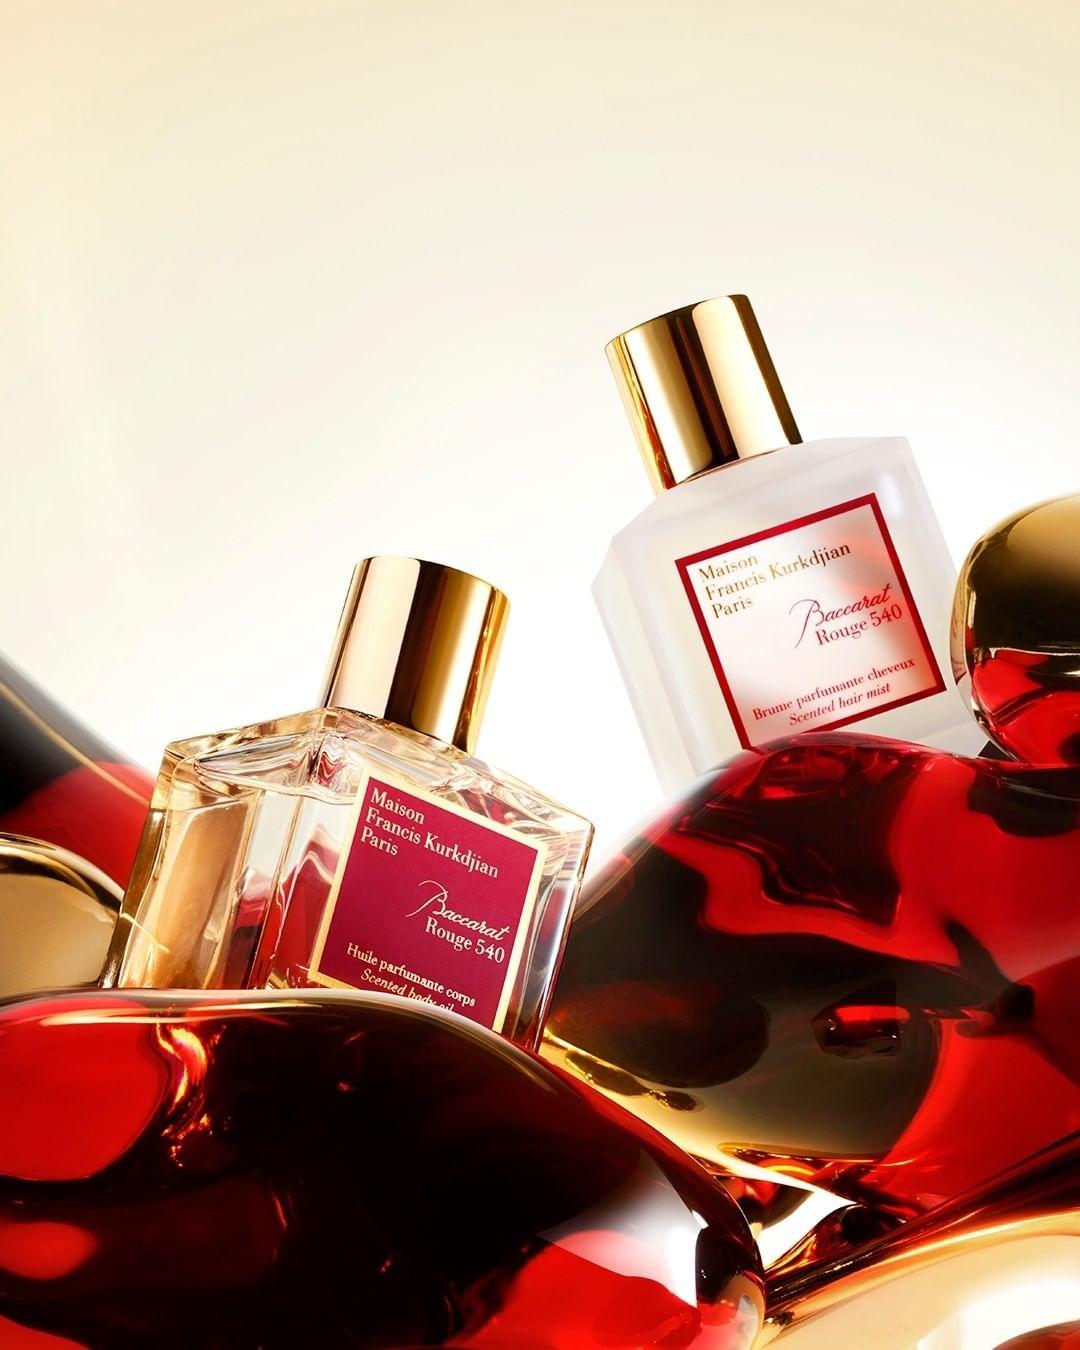 Maison Francis Kurkdjian - Baccarat Rouge 540 - body oil - hair mist | Perfume Lounge